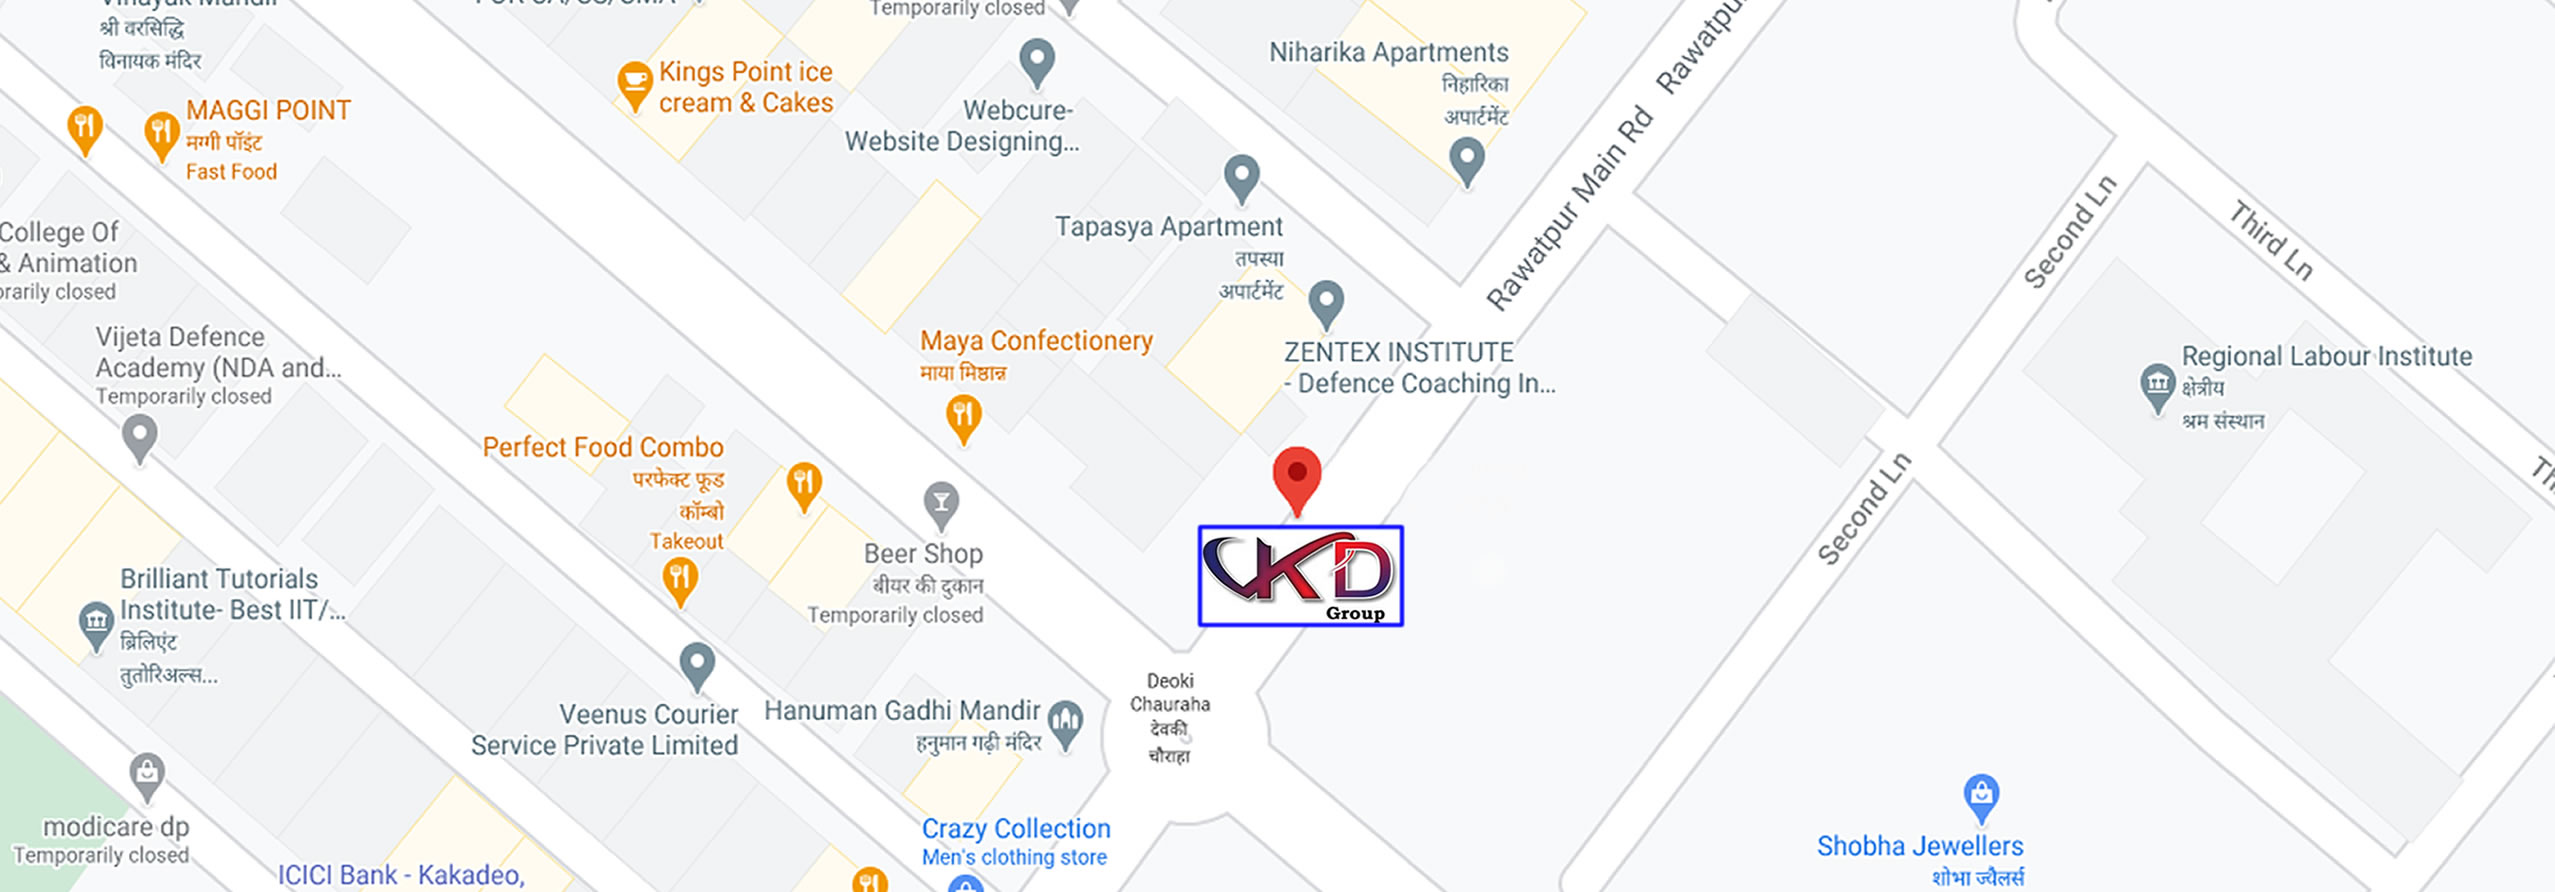 vkd-group-google-map